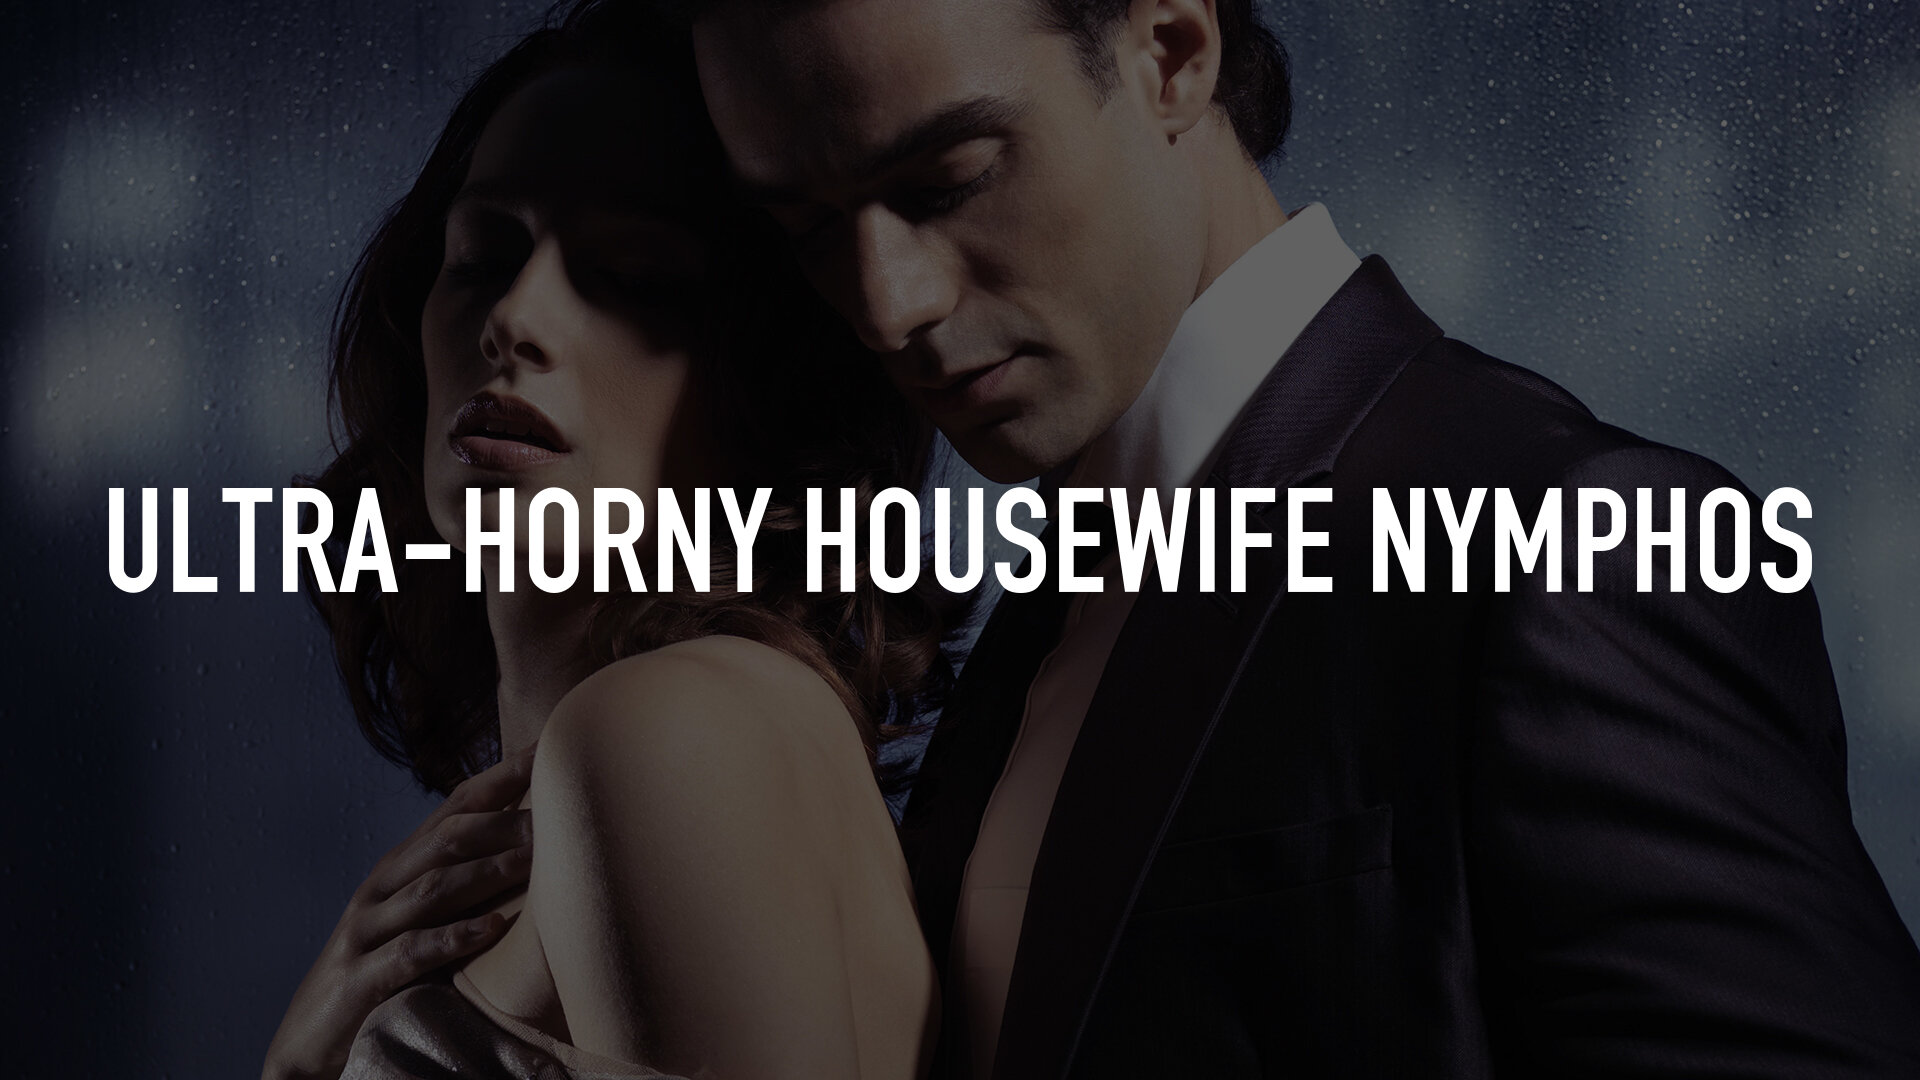 Ultra-Horny Housewife Nymphos TV.nu